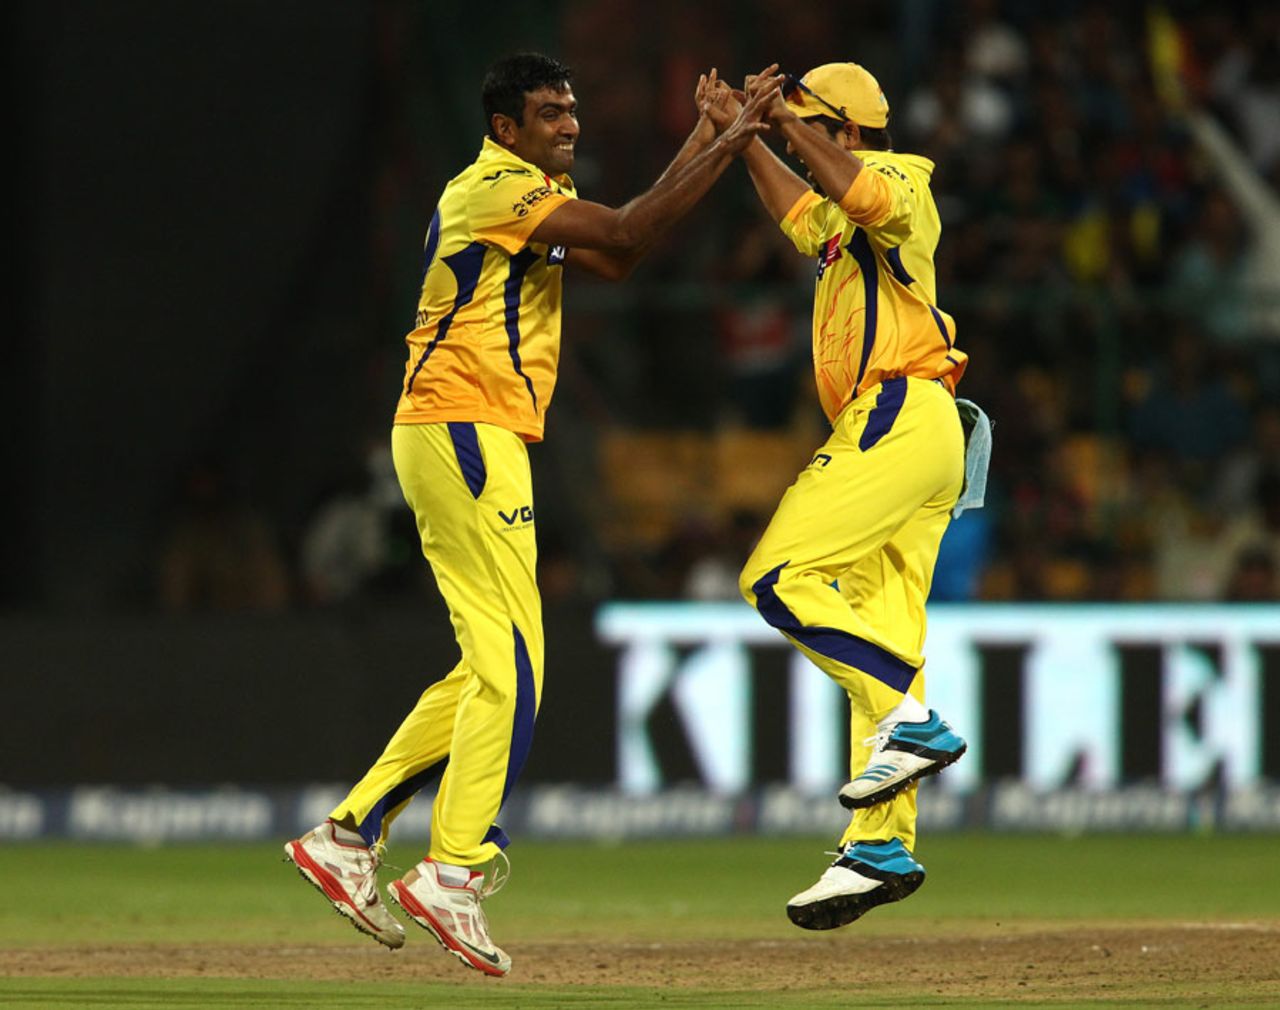 R Ashwin picked up 3 for 20, Chennai Super Kings v Perth Scorchers, Champions League T20, Bangalore, September 27, 2014